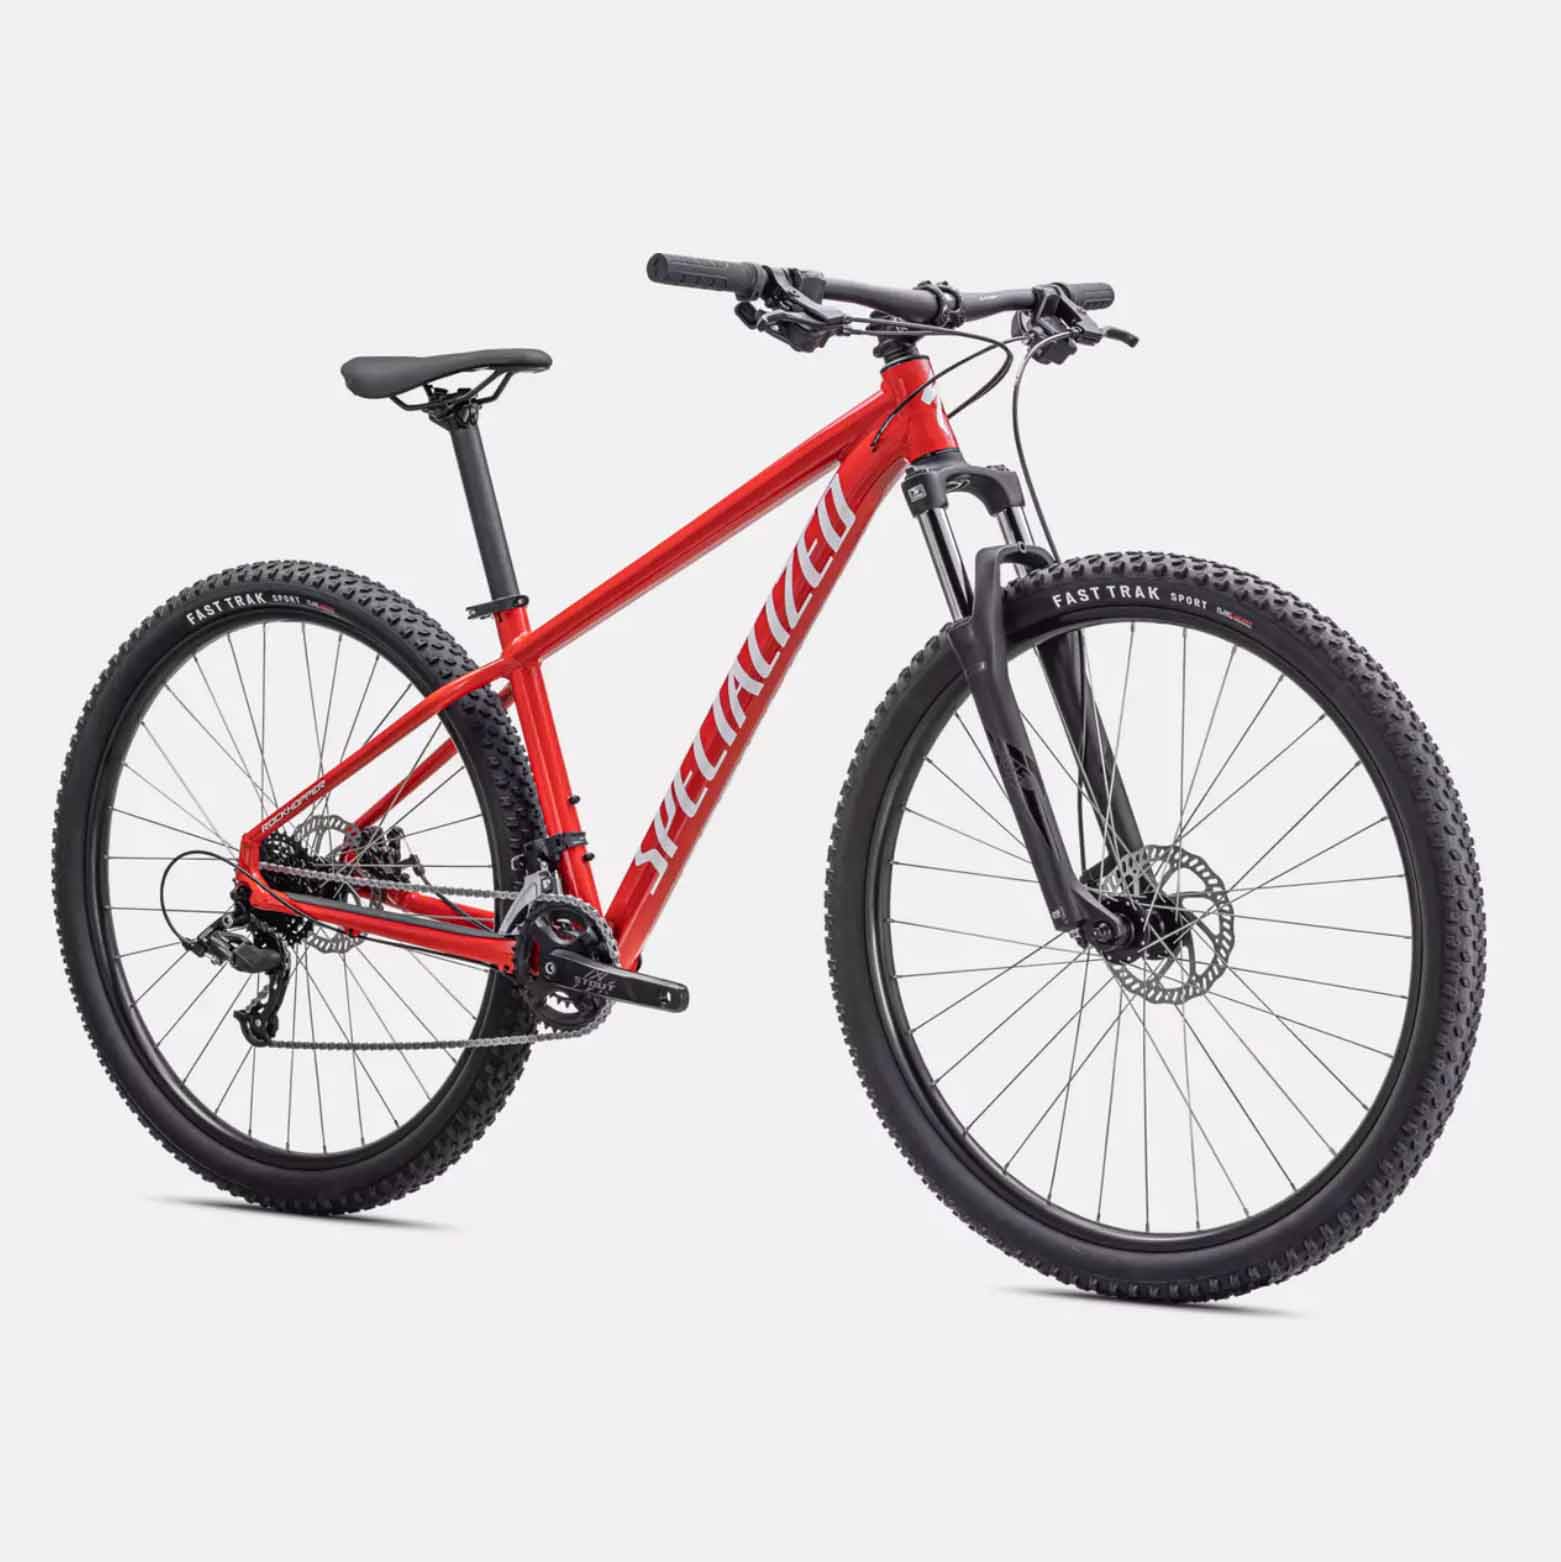 Rockhopper 27.5 bicycle in red frame